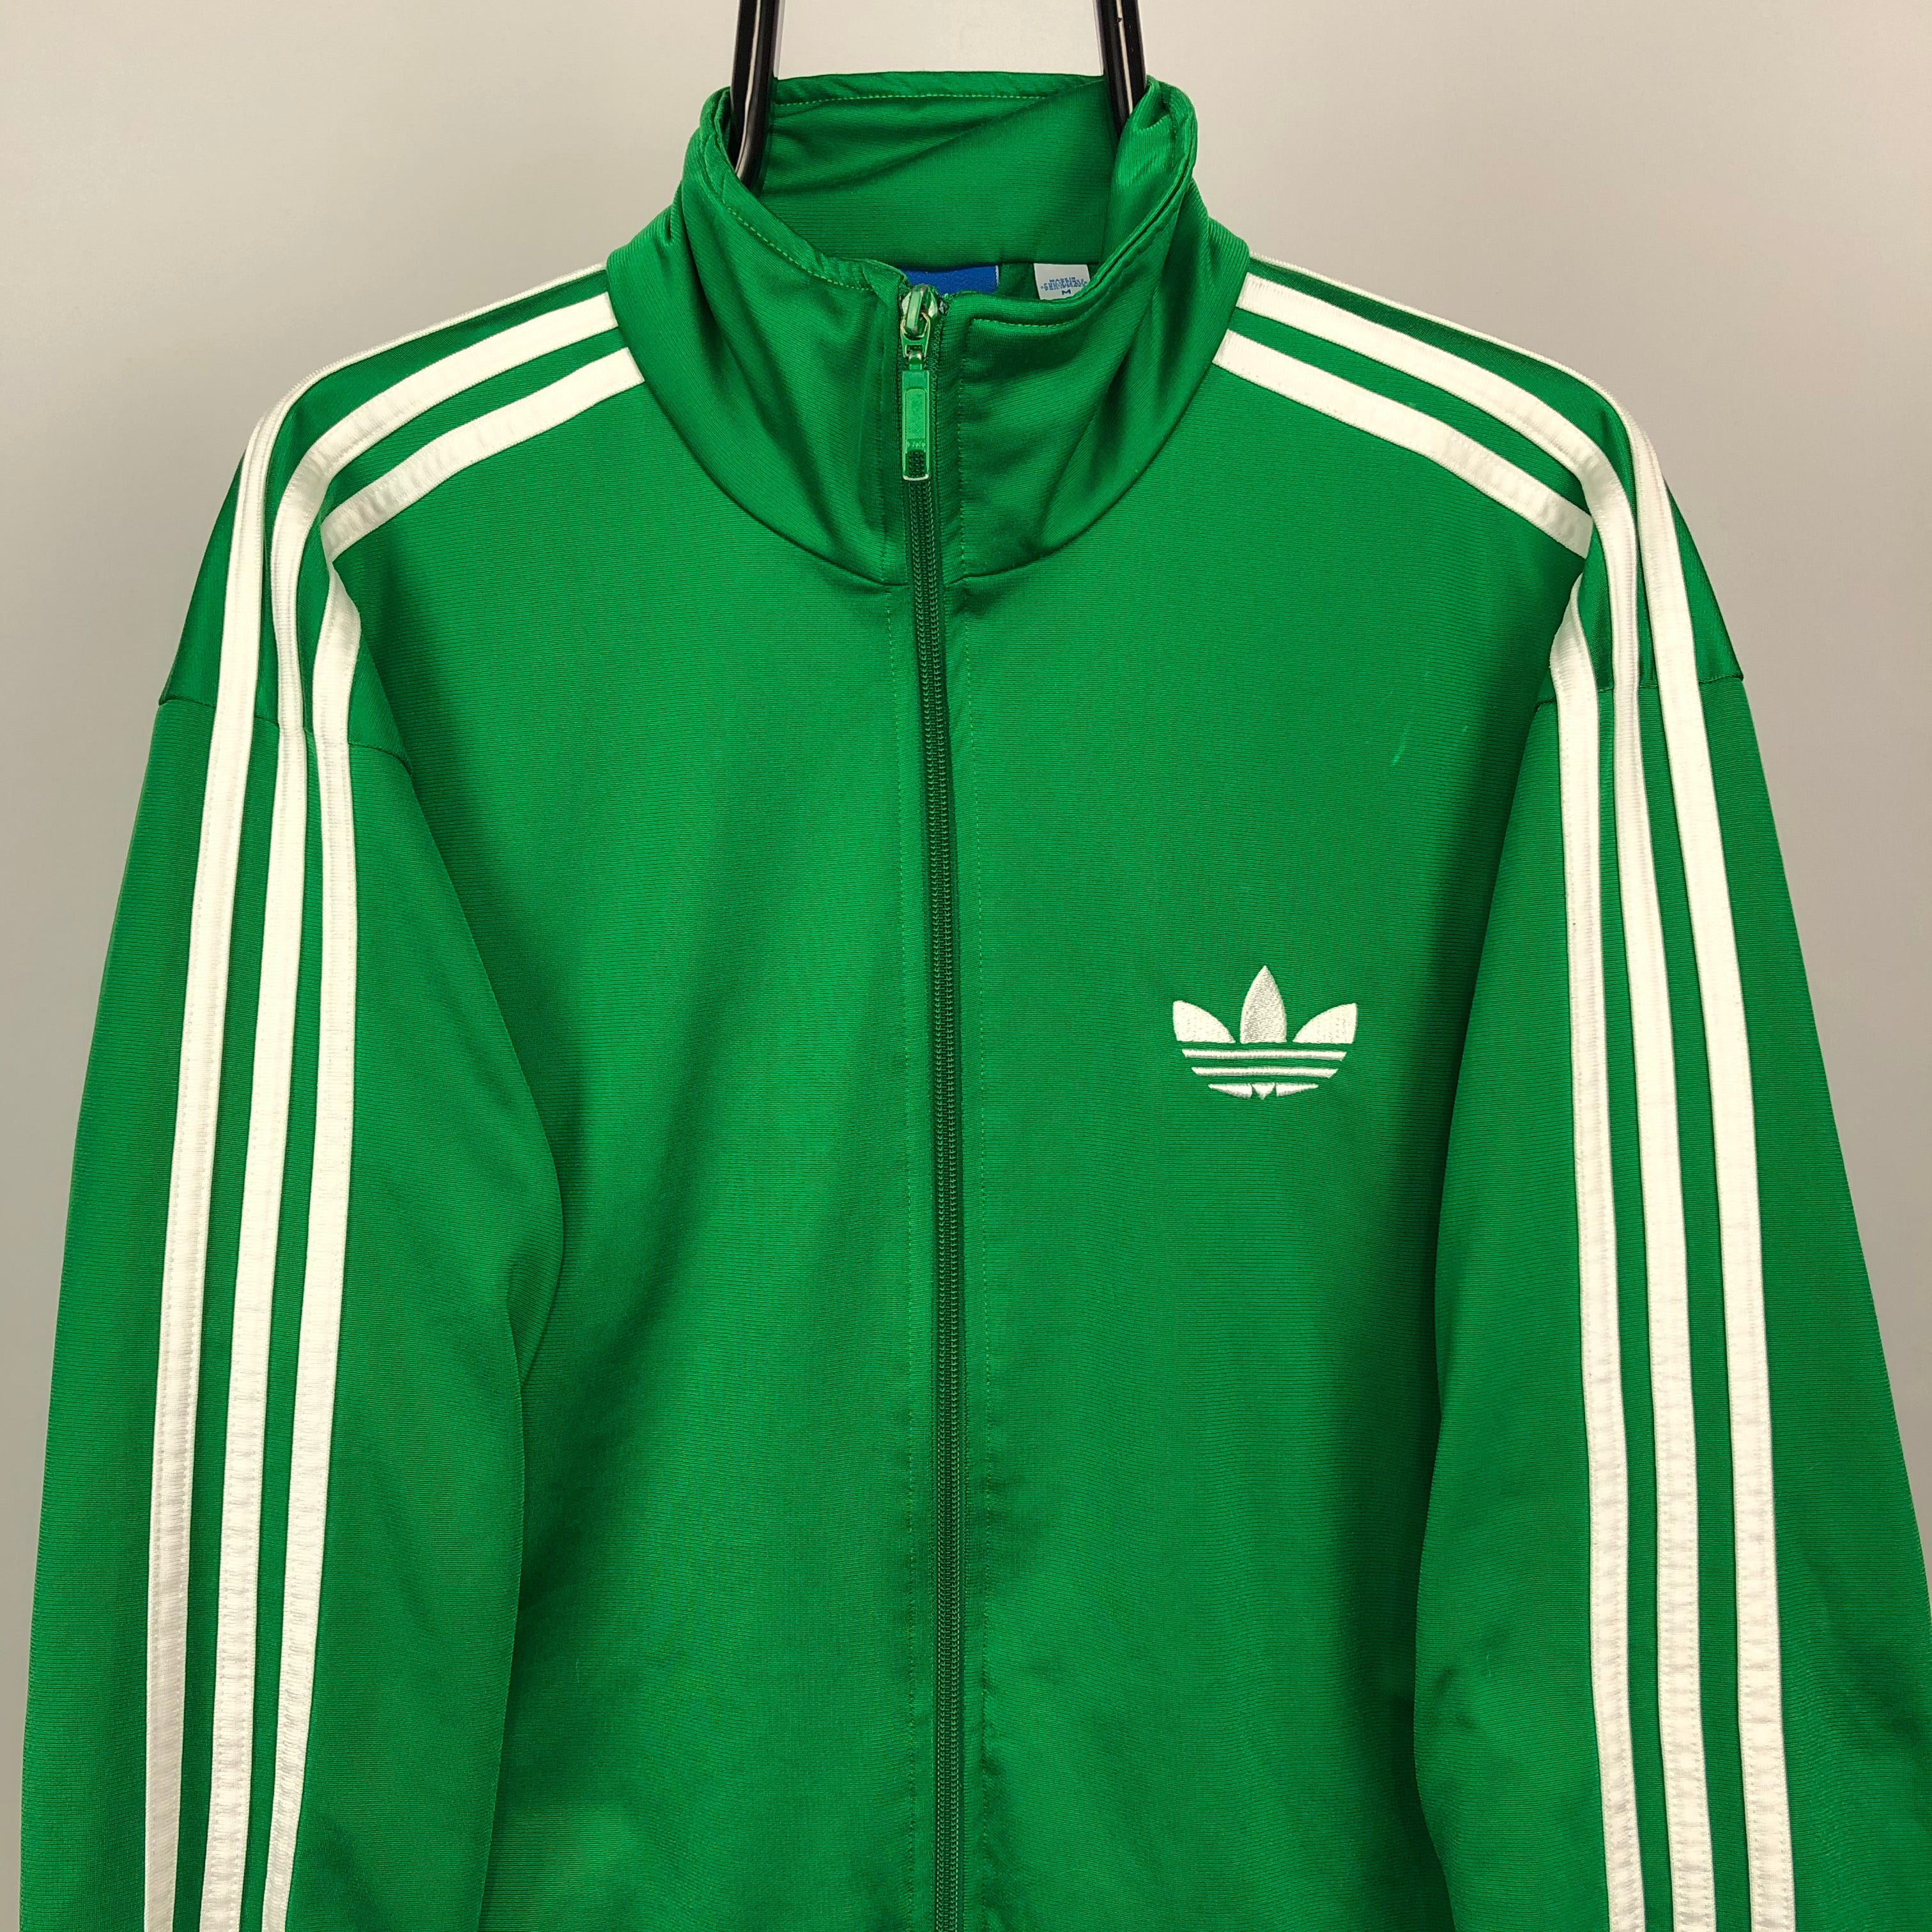 Adidas Originals Track Jacket in Green - Men's Medium/Women's Large ...